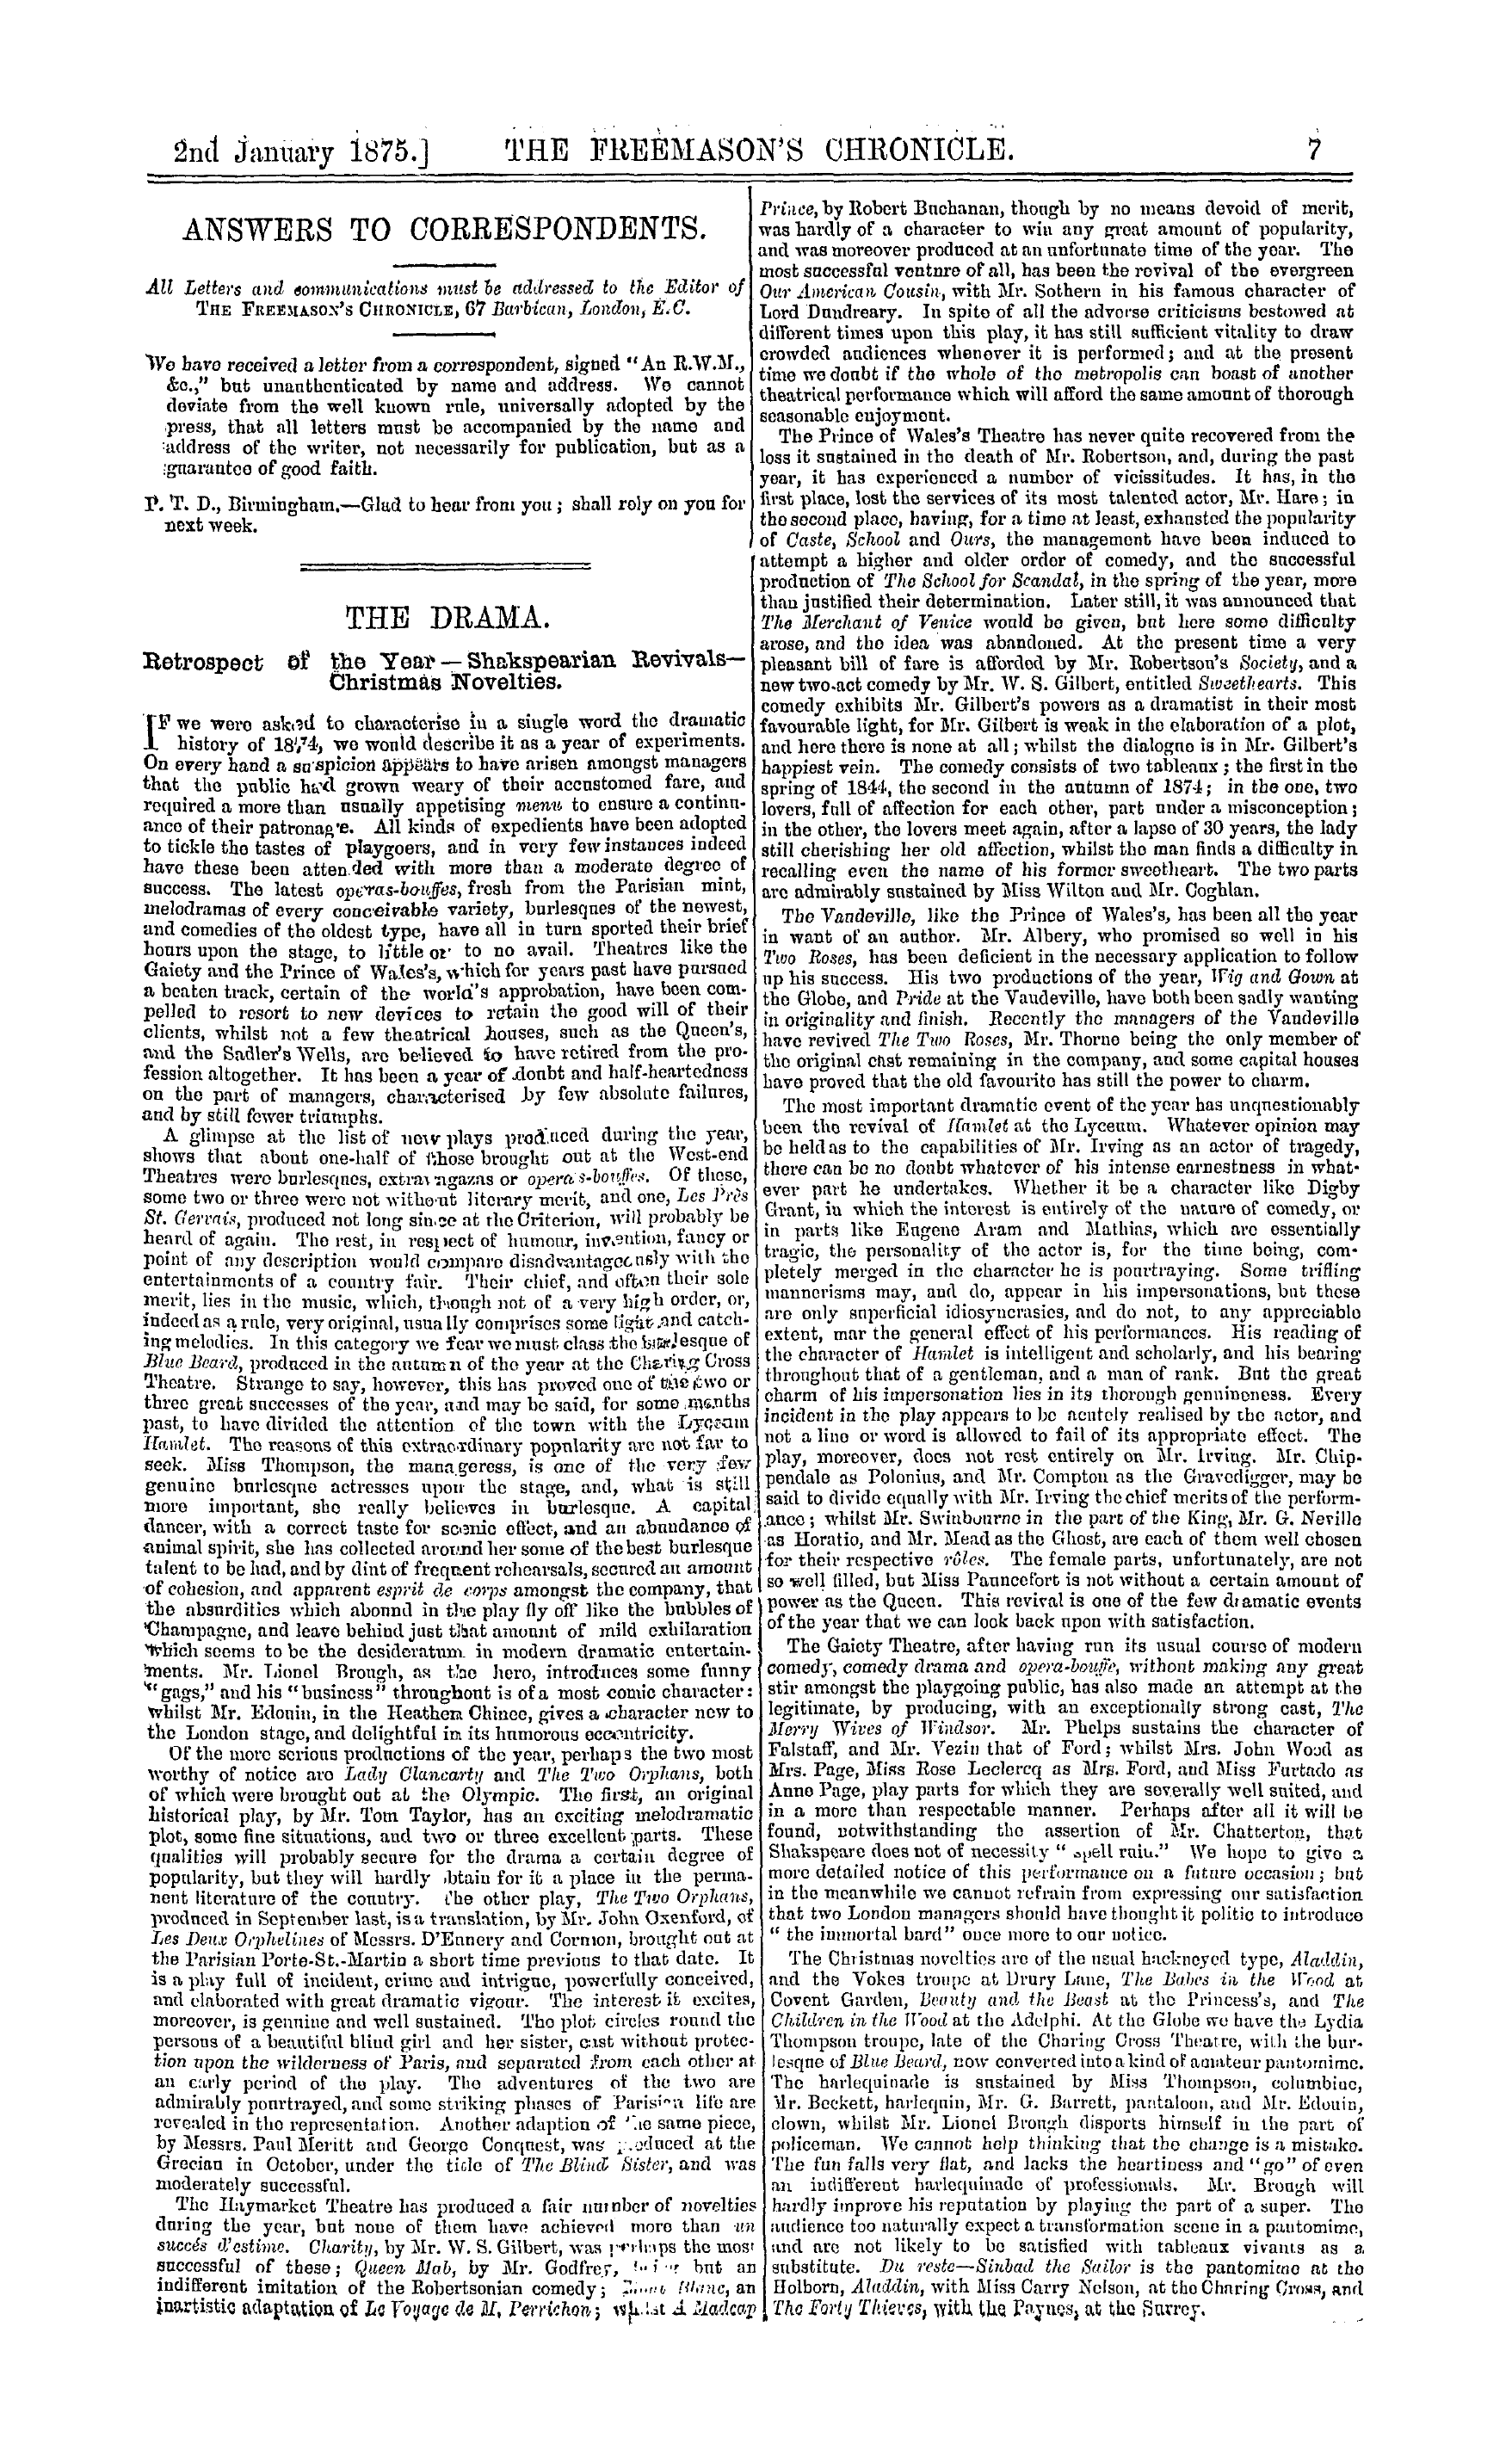 The Freemason's Chronicle: 1875-01-02 - The Drama.